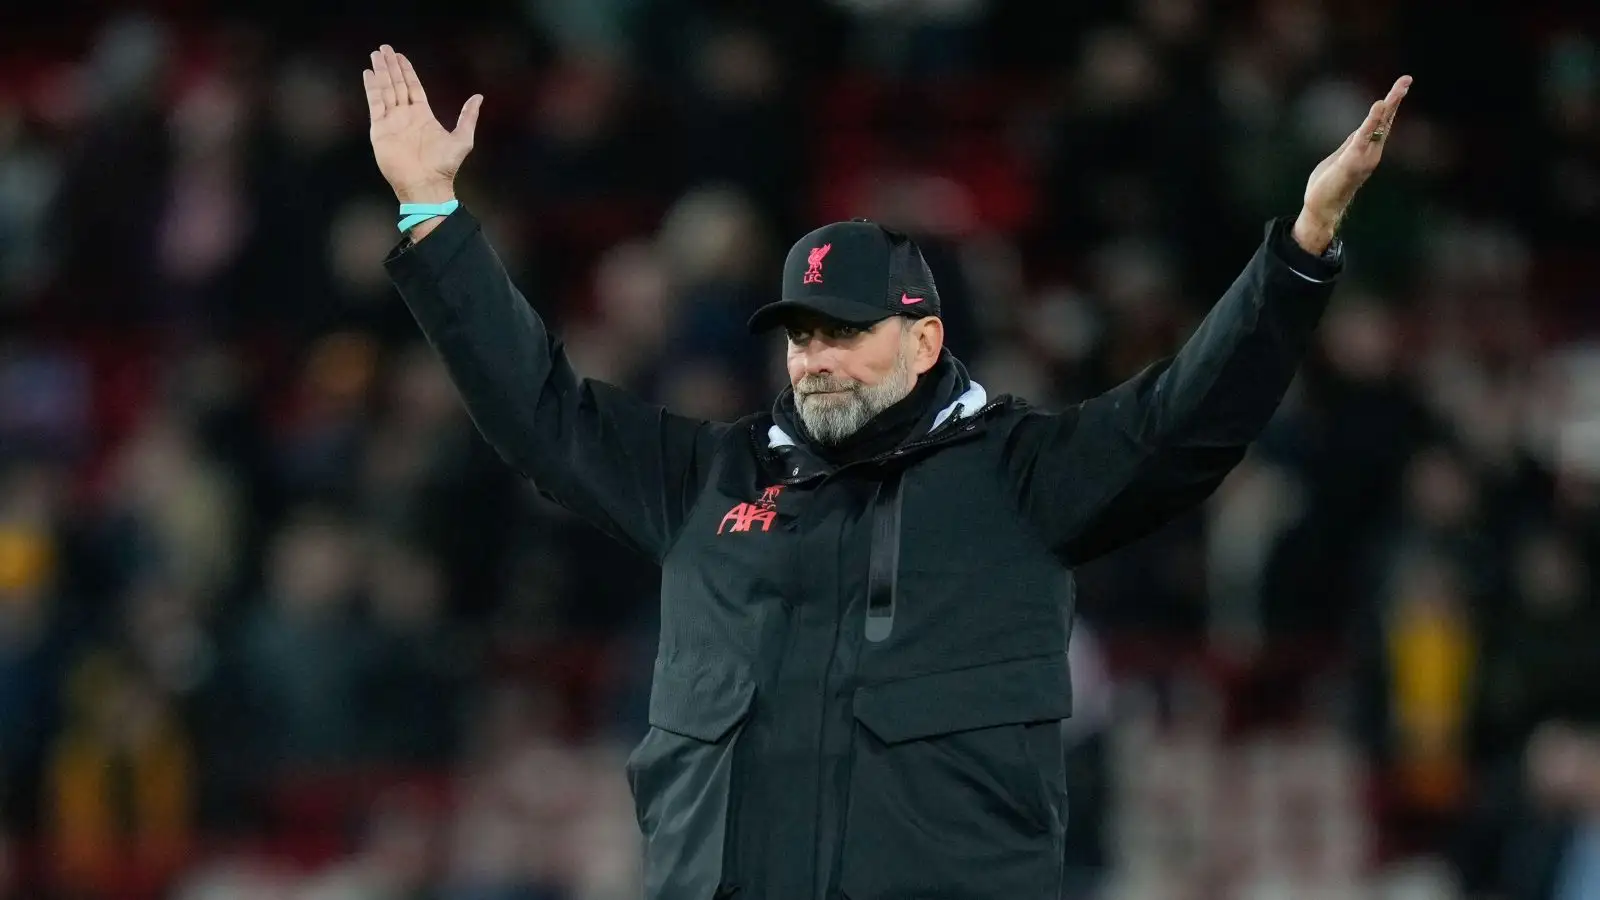 Liverpool boss Jurgen Klopp puts his arms in the air